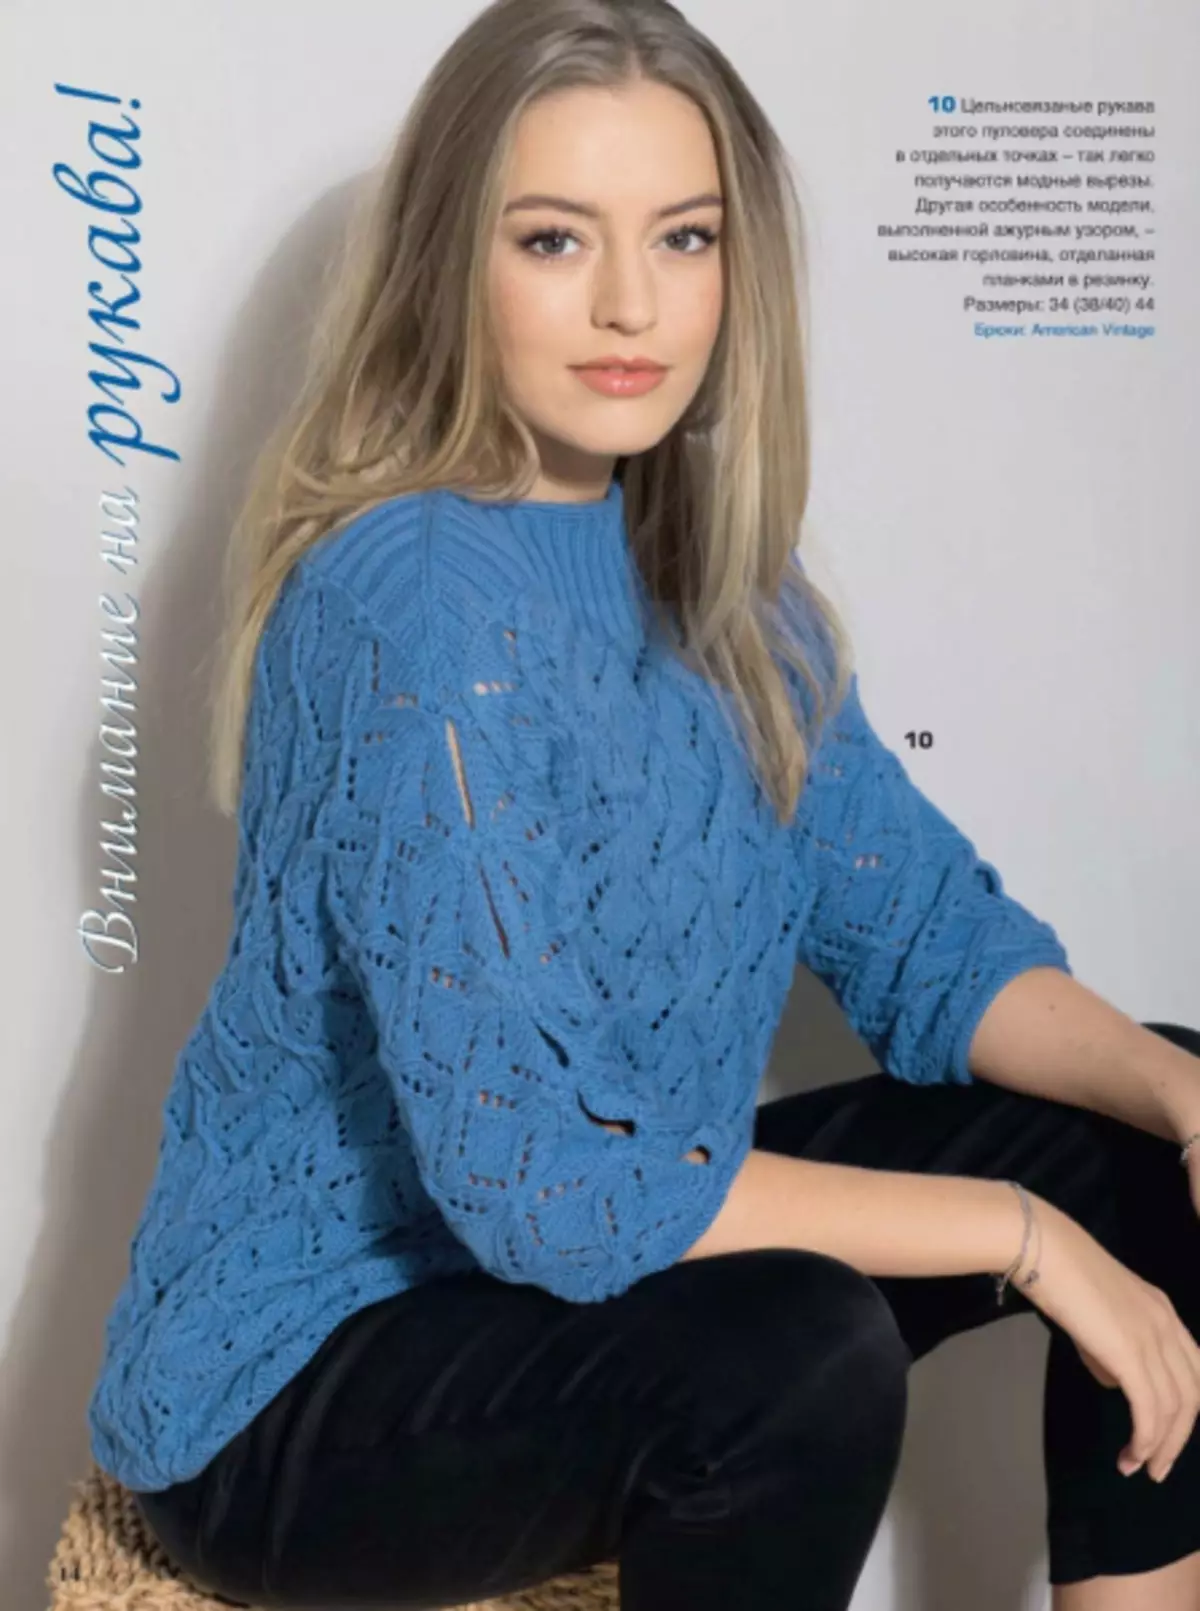 Sabrina magazini nhamba 2 - 2019